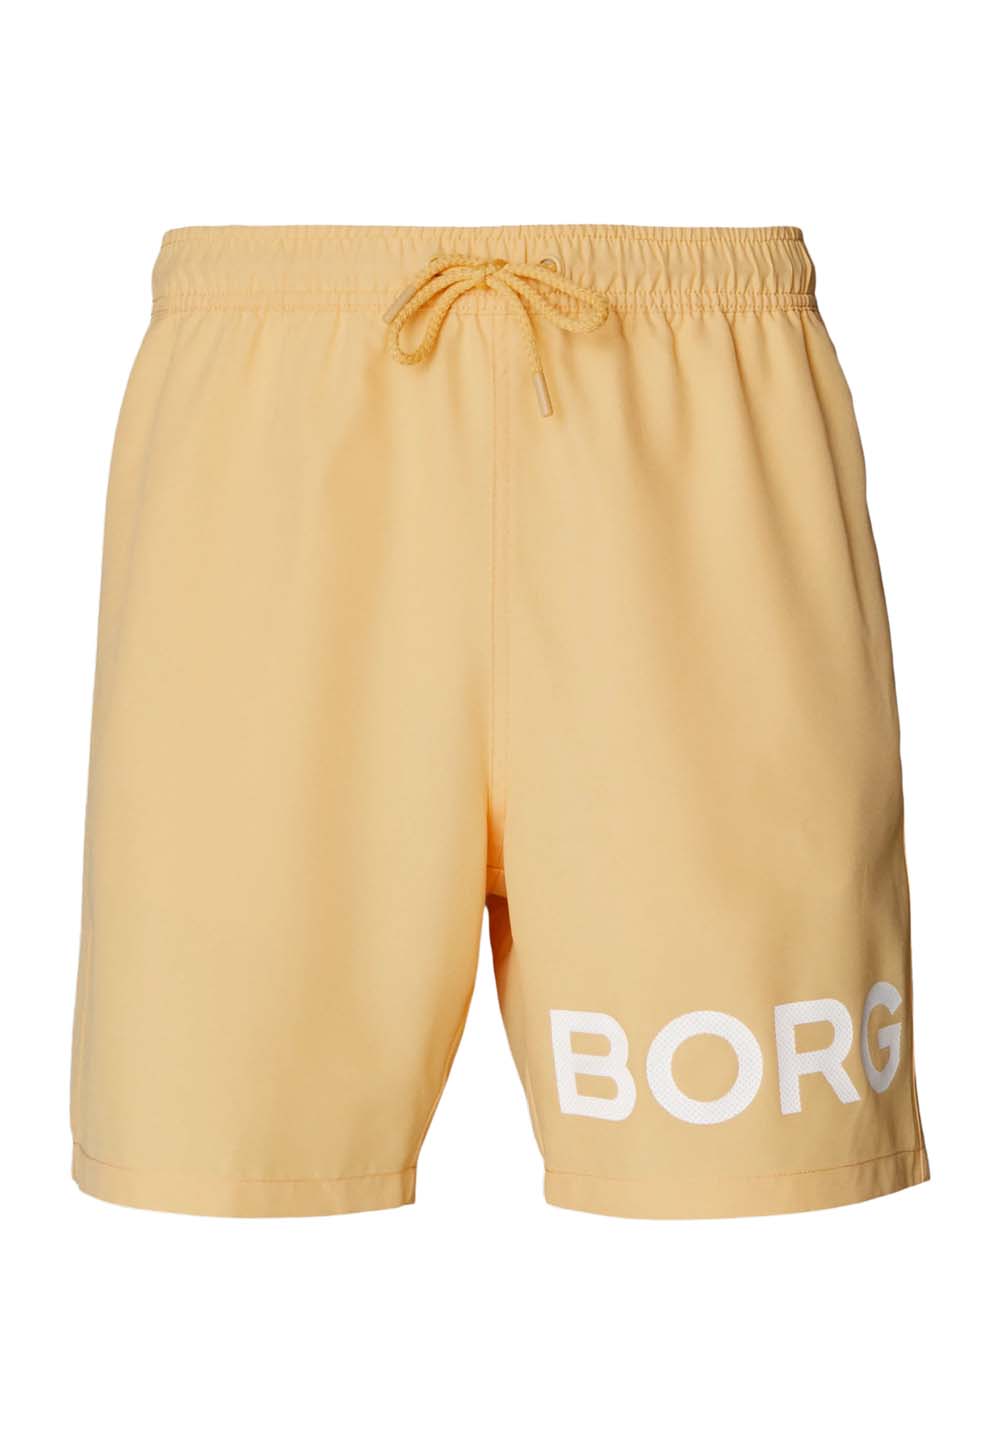 Björn Borg Men’s Borg Swim Shorts Apricot Cream